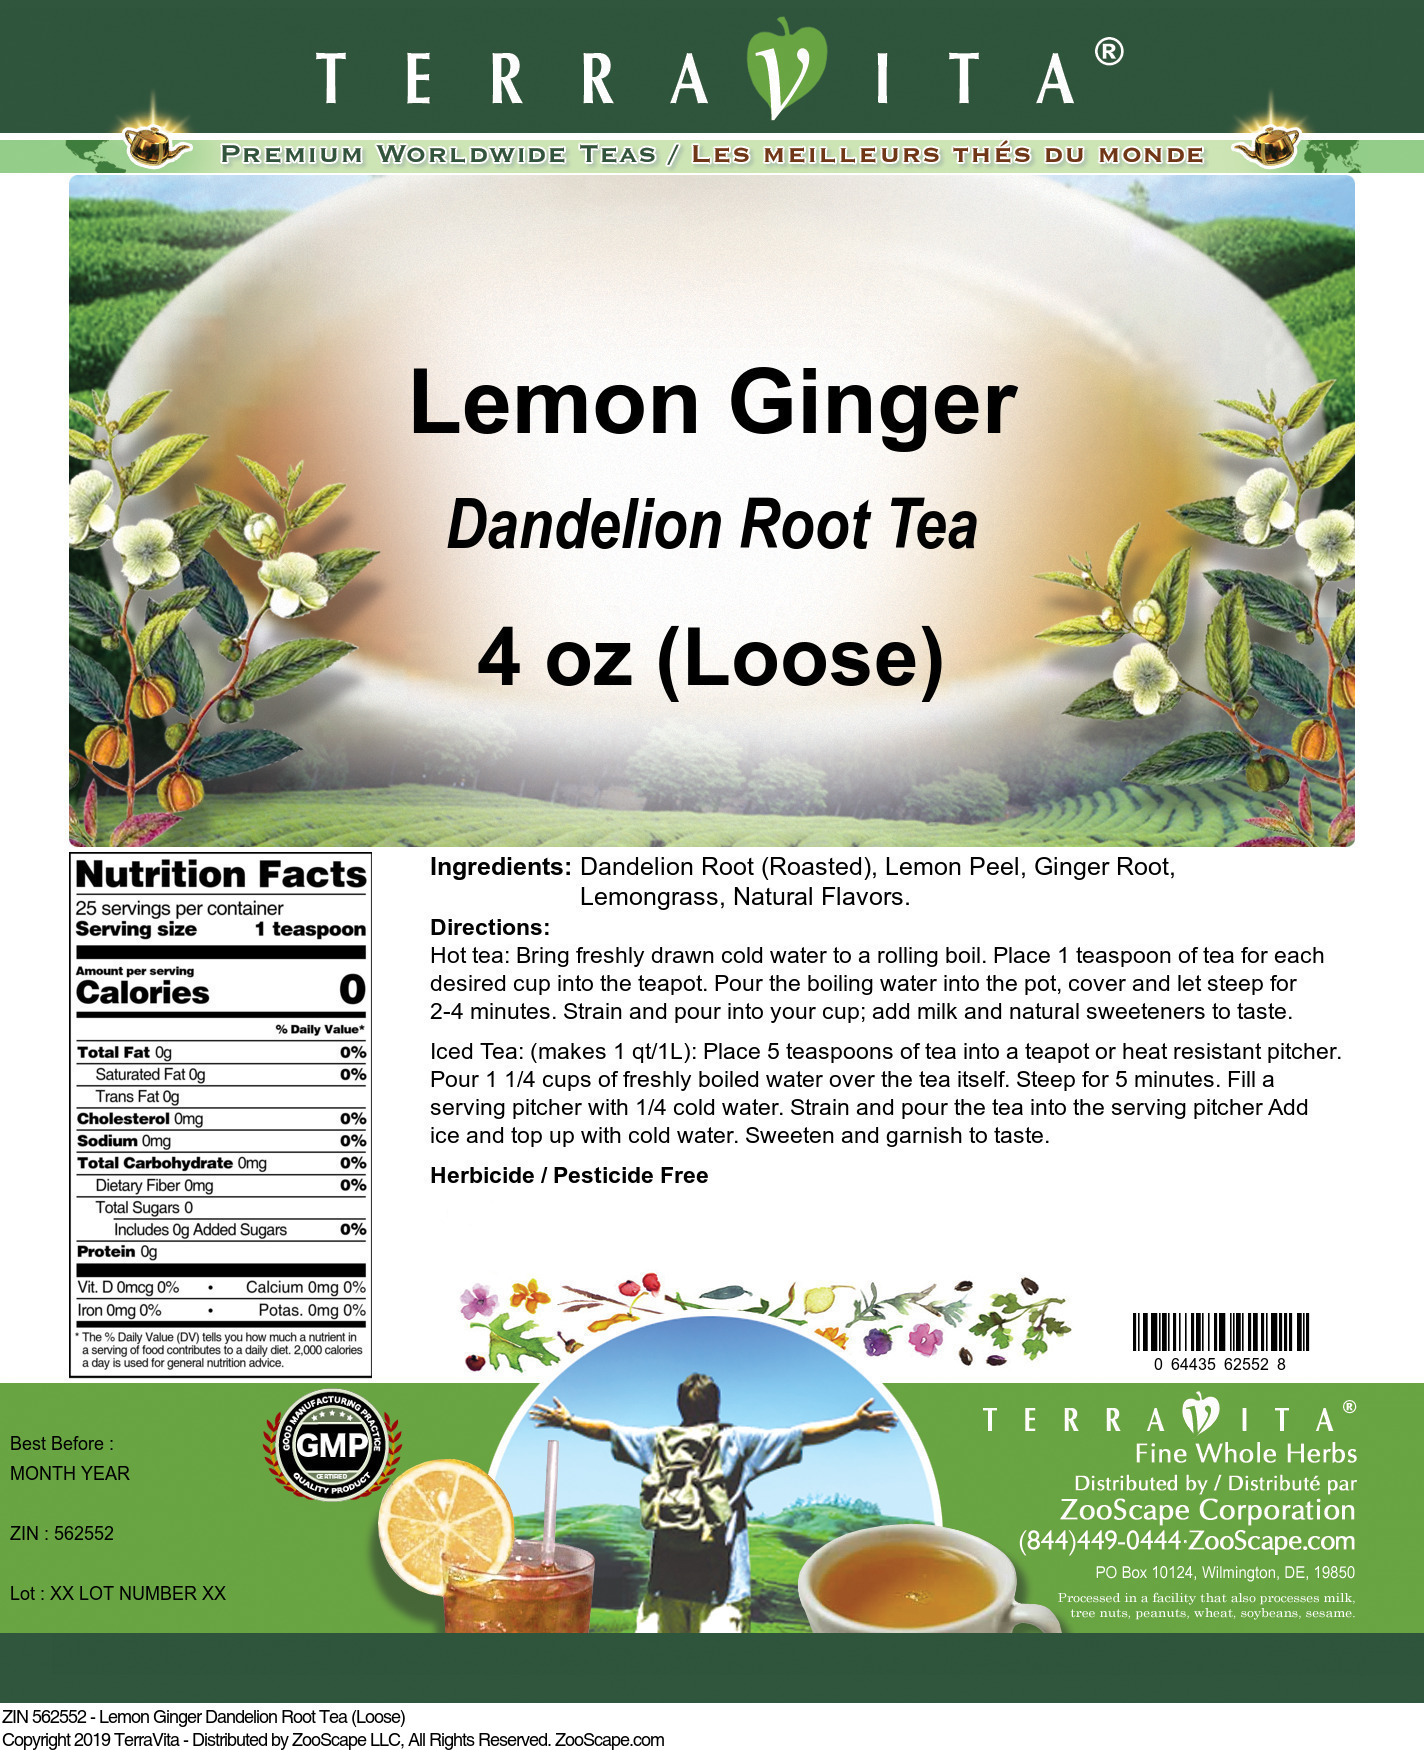 Lemon Ginger Dandelion Root Tea (Loose) - Label